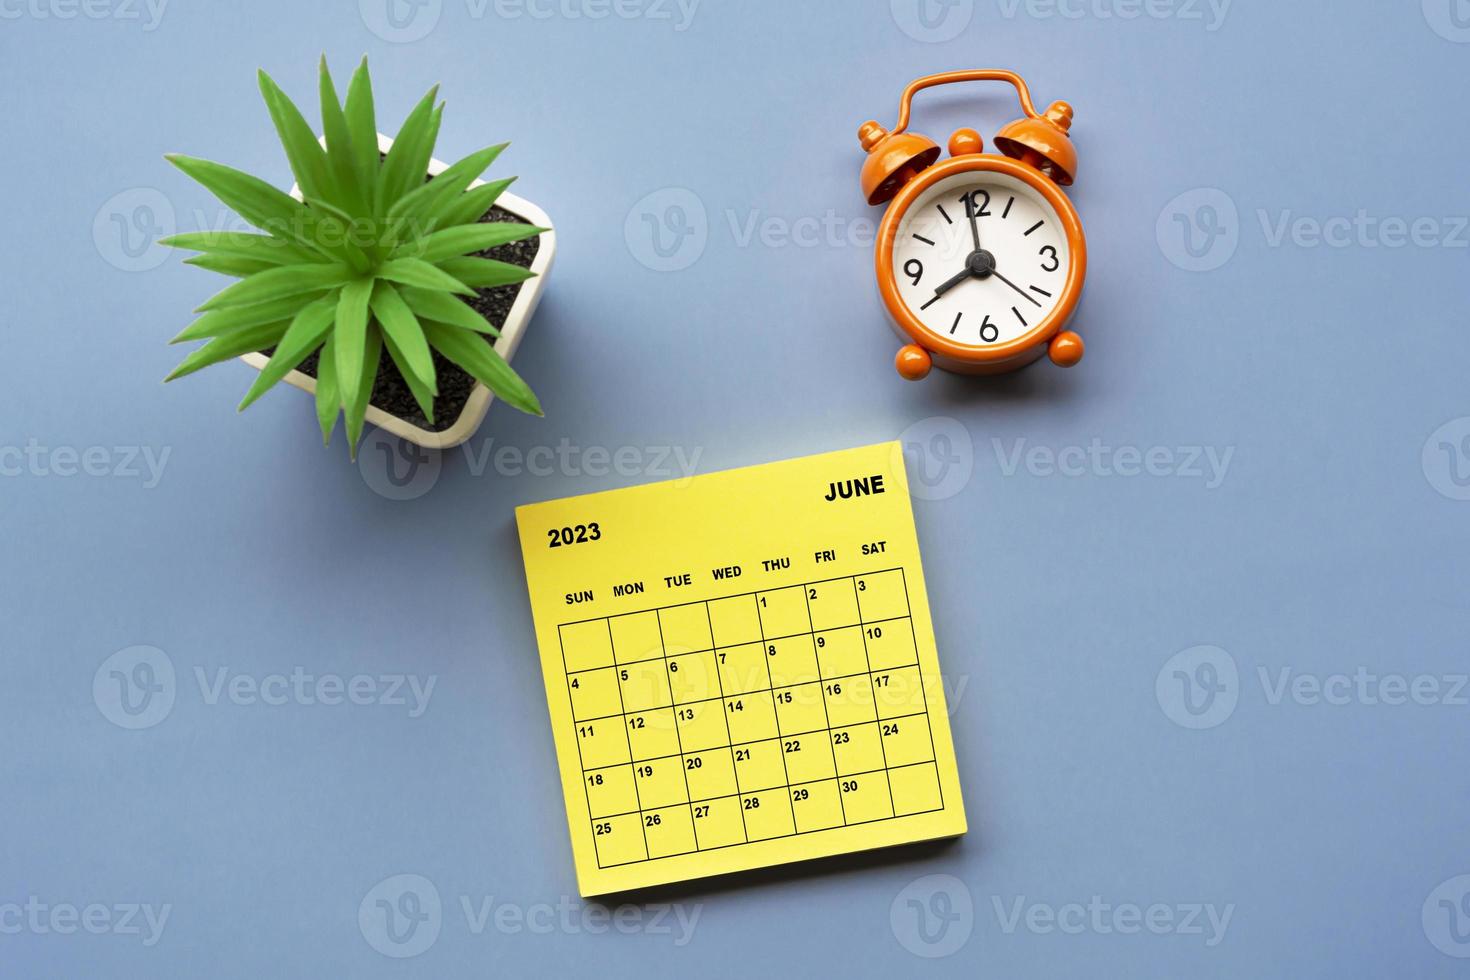 June 2023 calendar on adhesive note with alarm clock set at 8 o'clock. photo